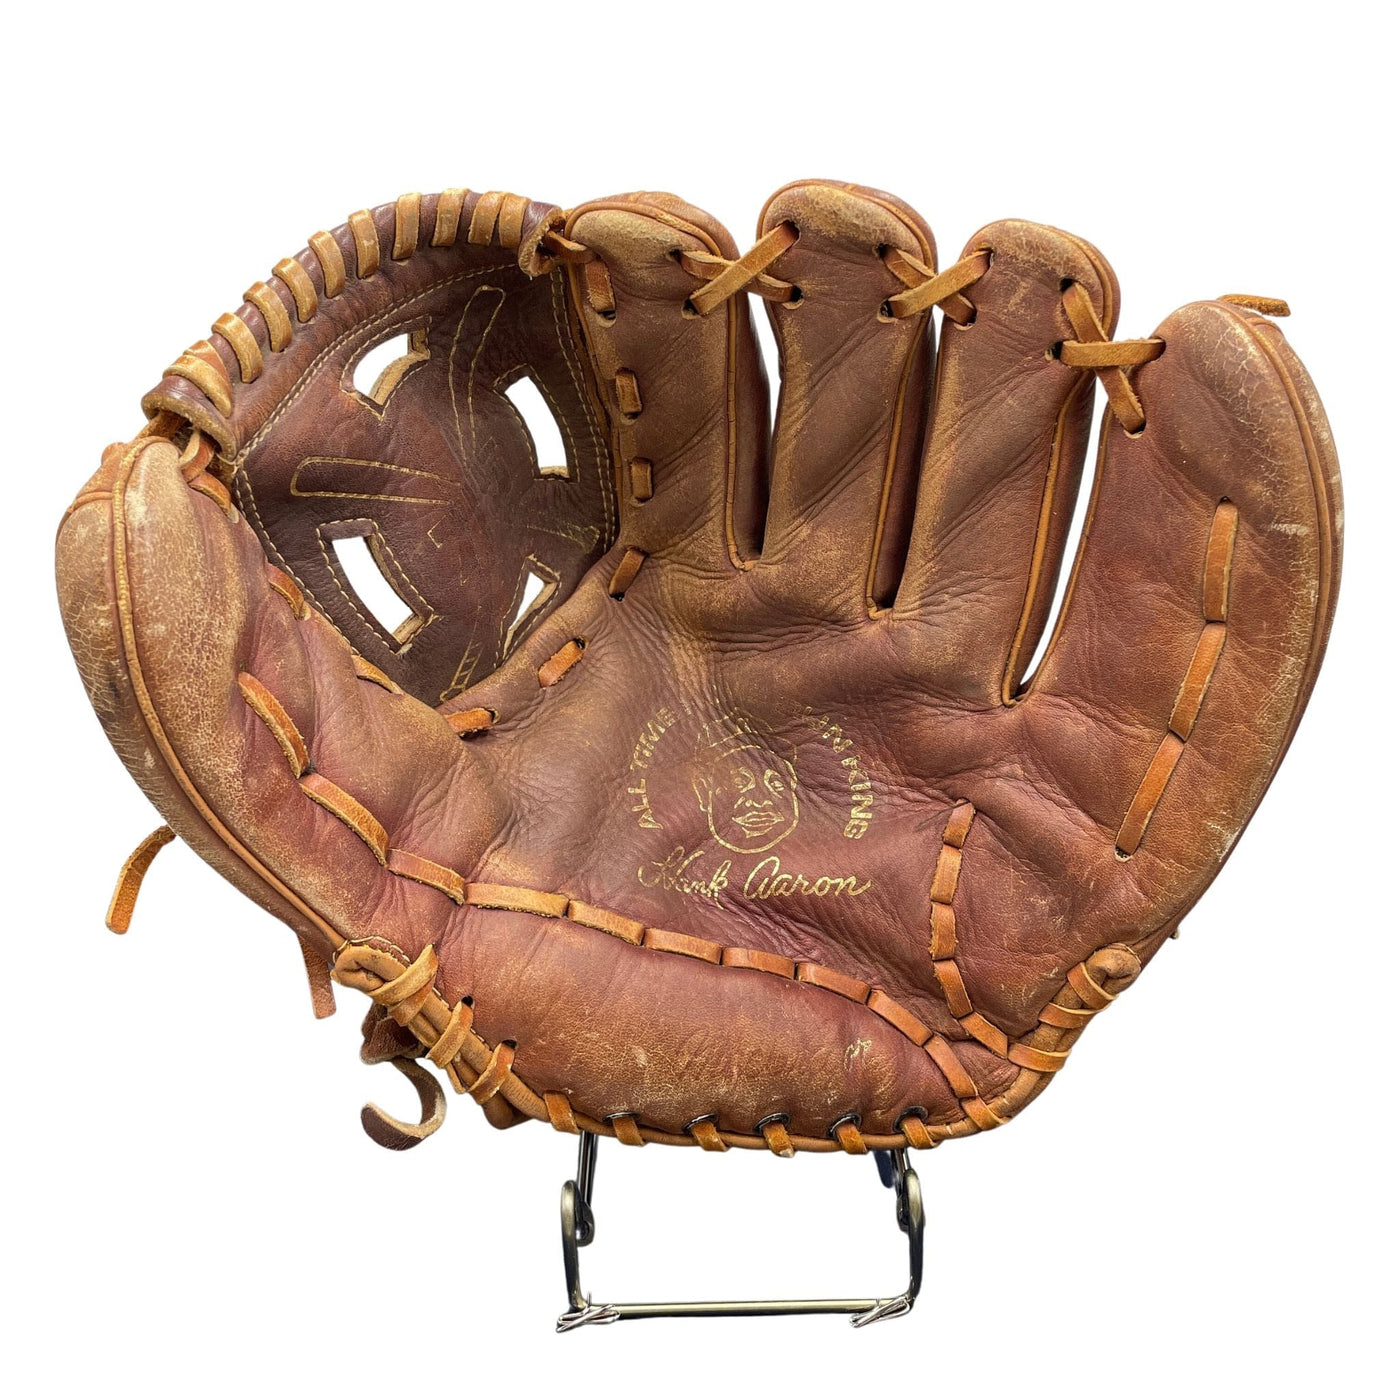 Hank Aaron Baseball Glove - G011